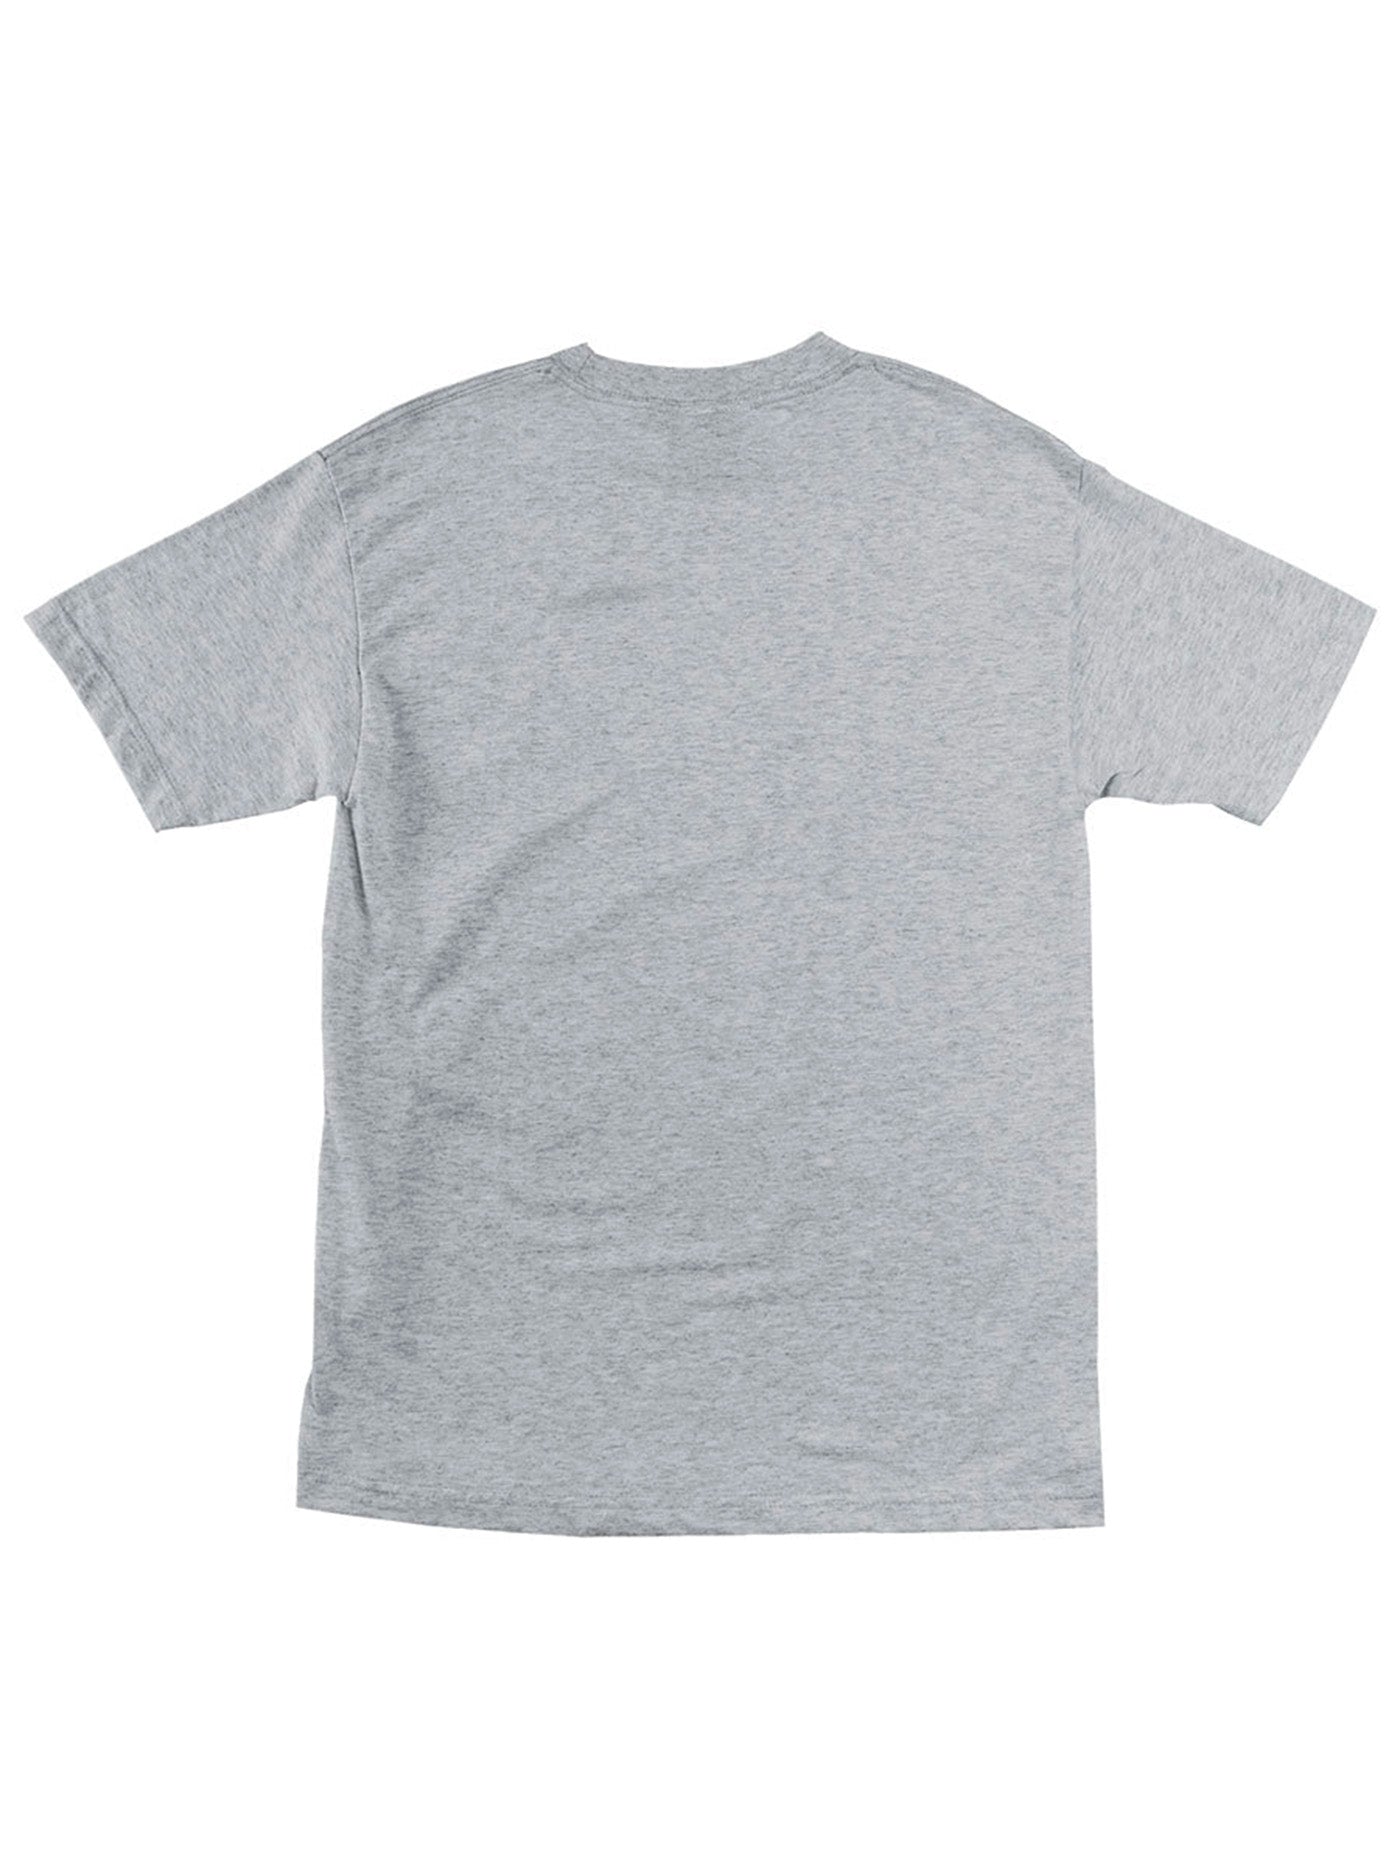 Independent Bar Logo T-Shirt Spring 2024